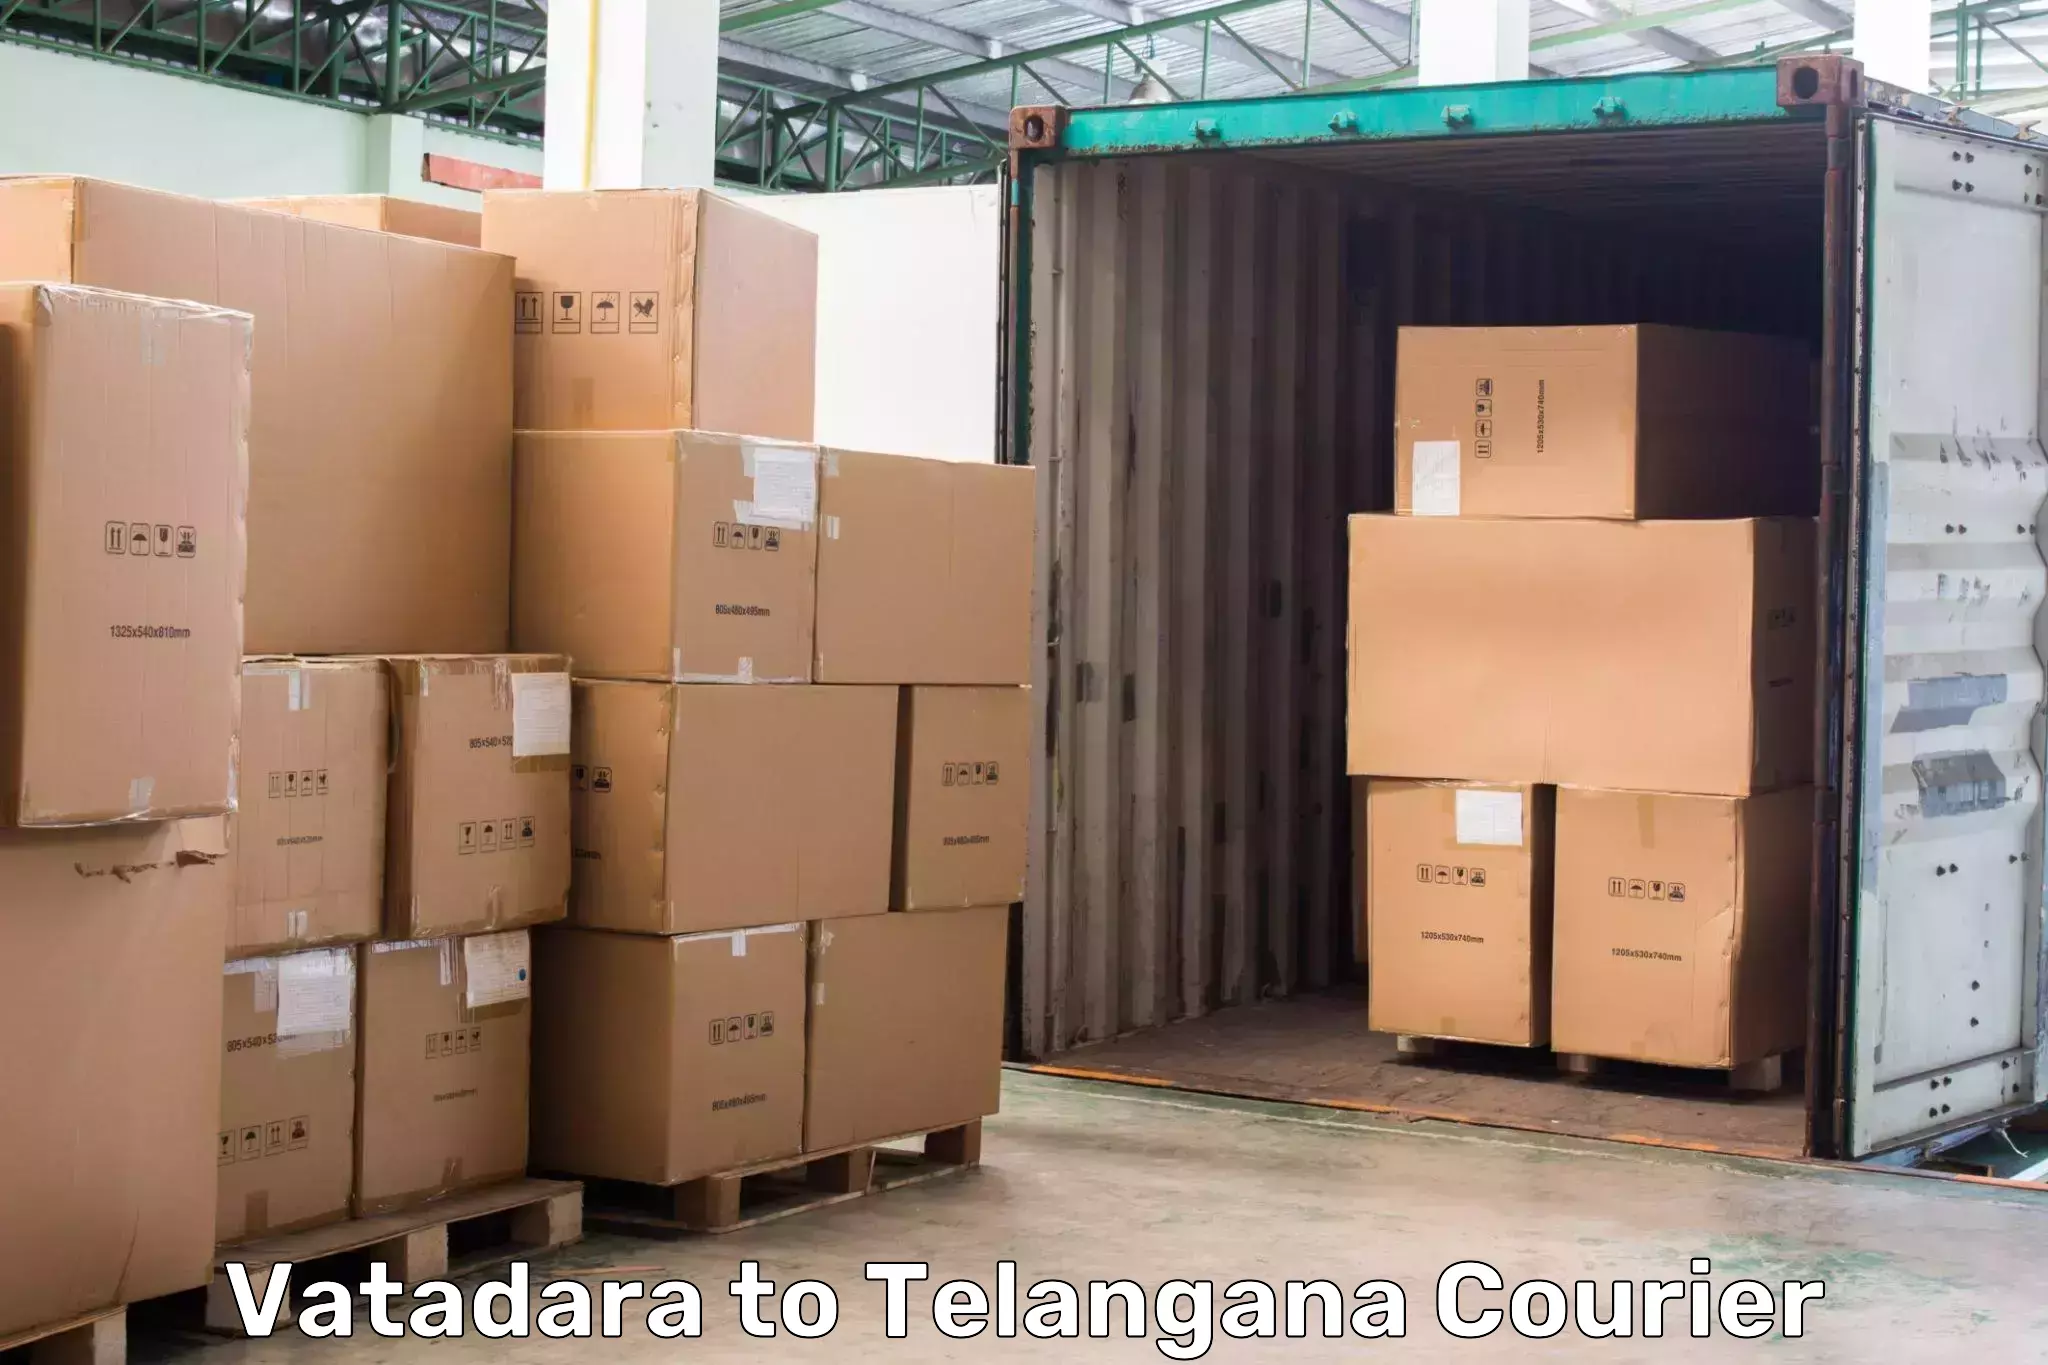 International courier networks Vatadara to Tallada